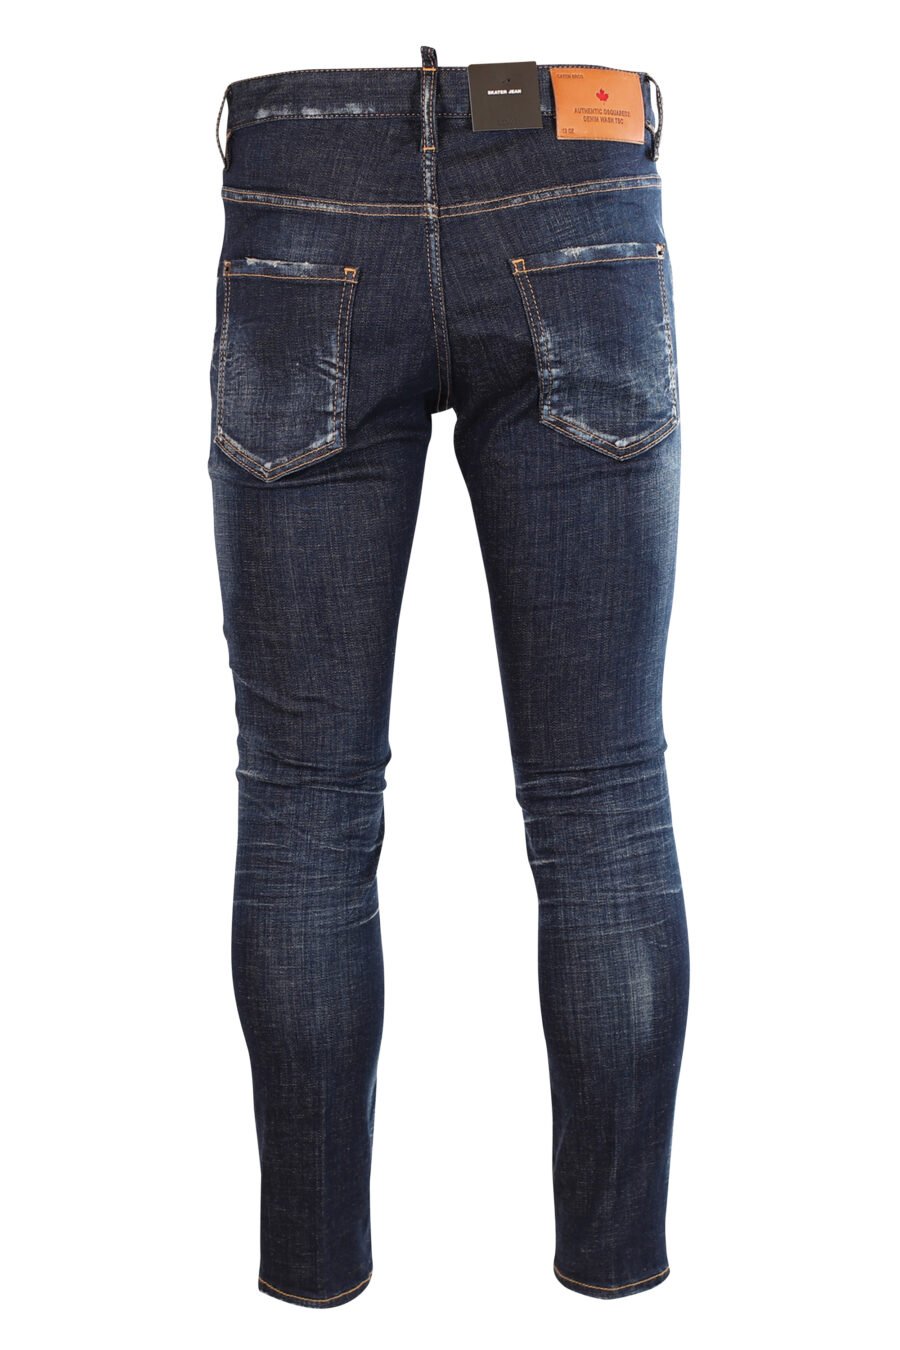 Dark blue semi frayed "skater jean" jeans - 8052134939215 3